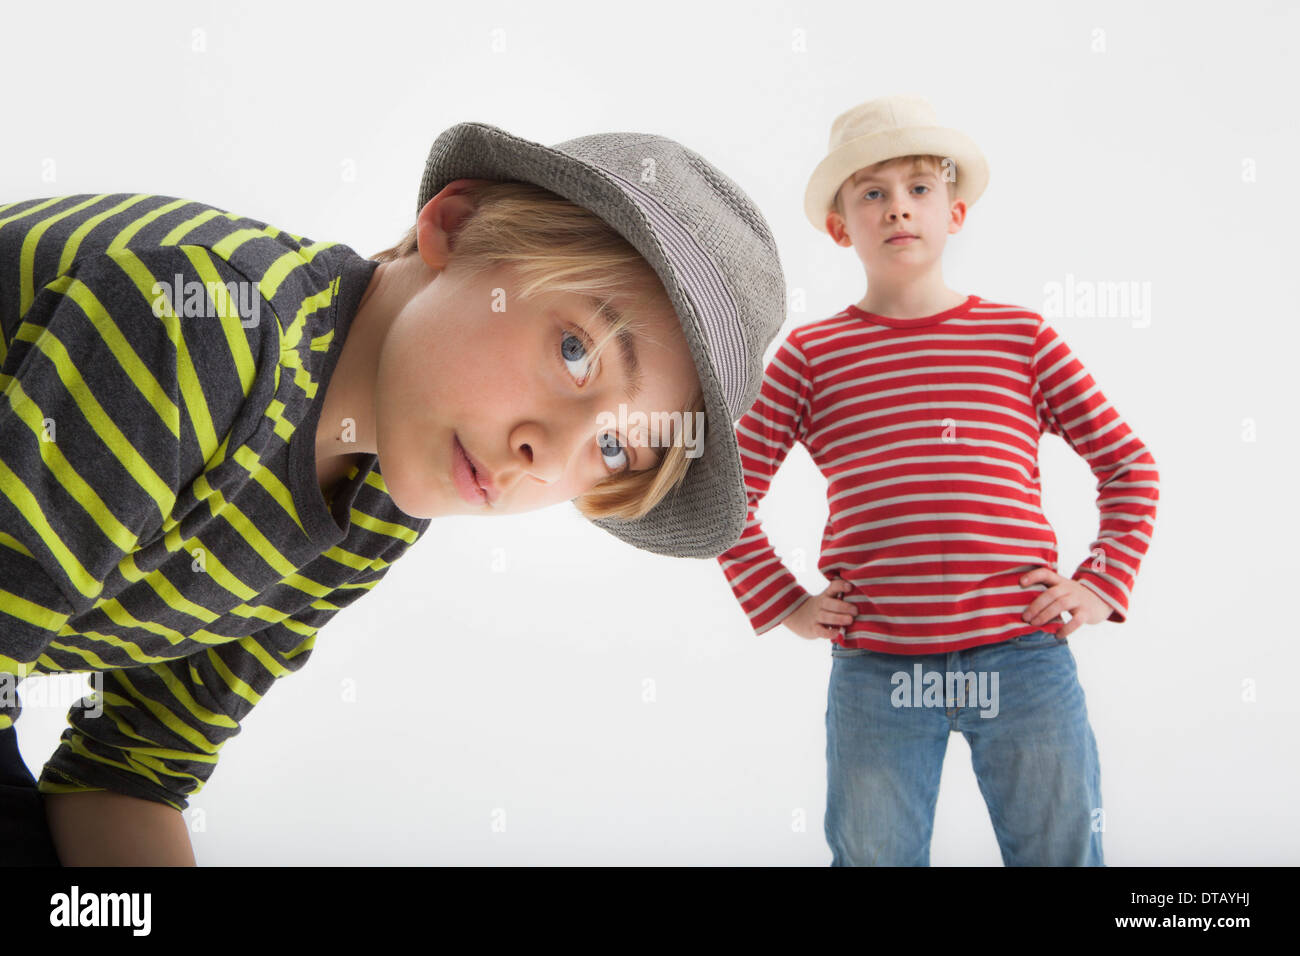 Portrait of boys against white background Stock Photo